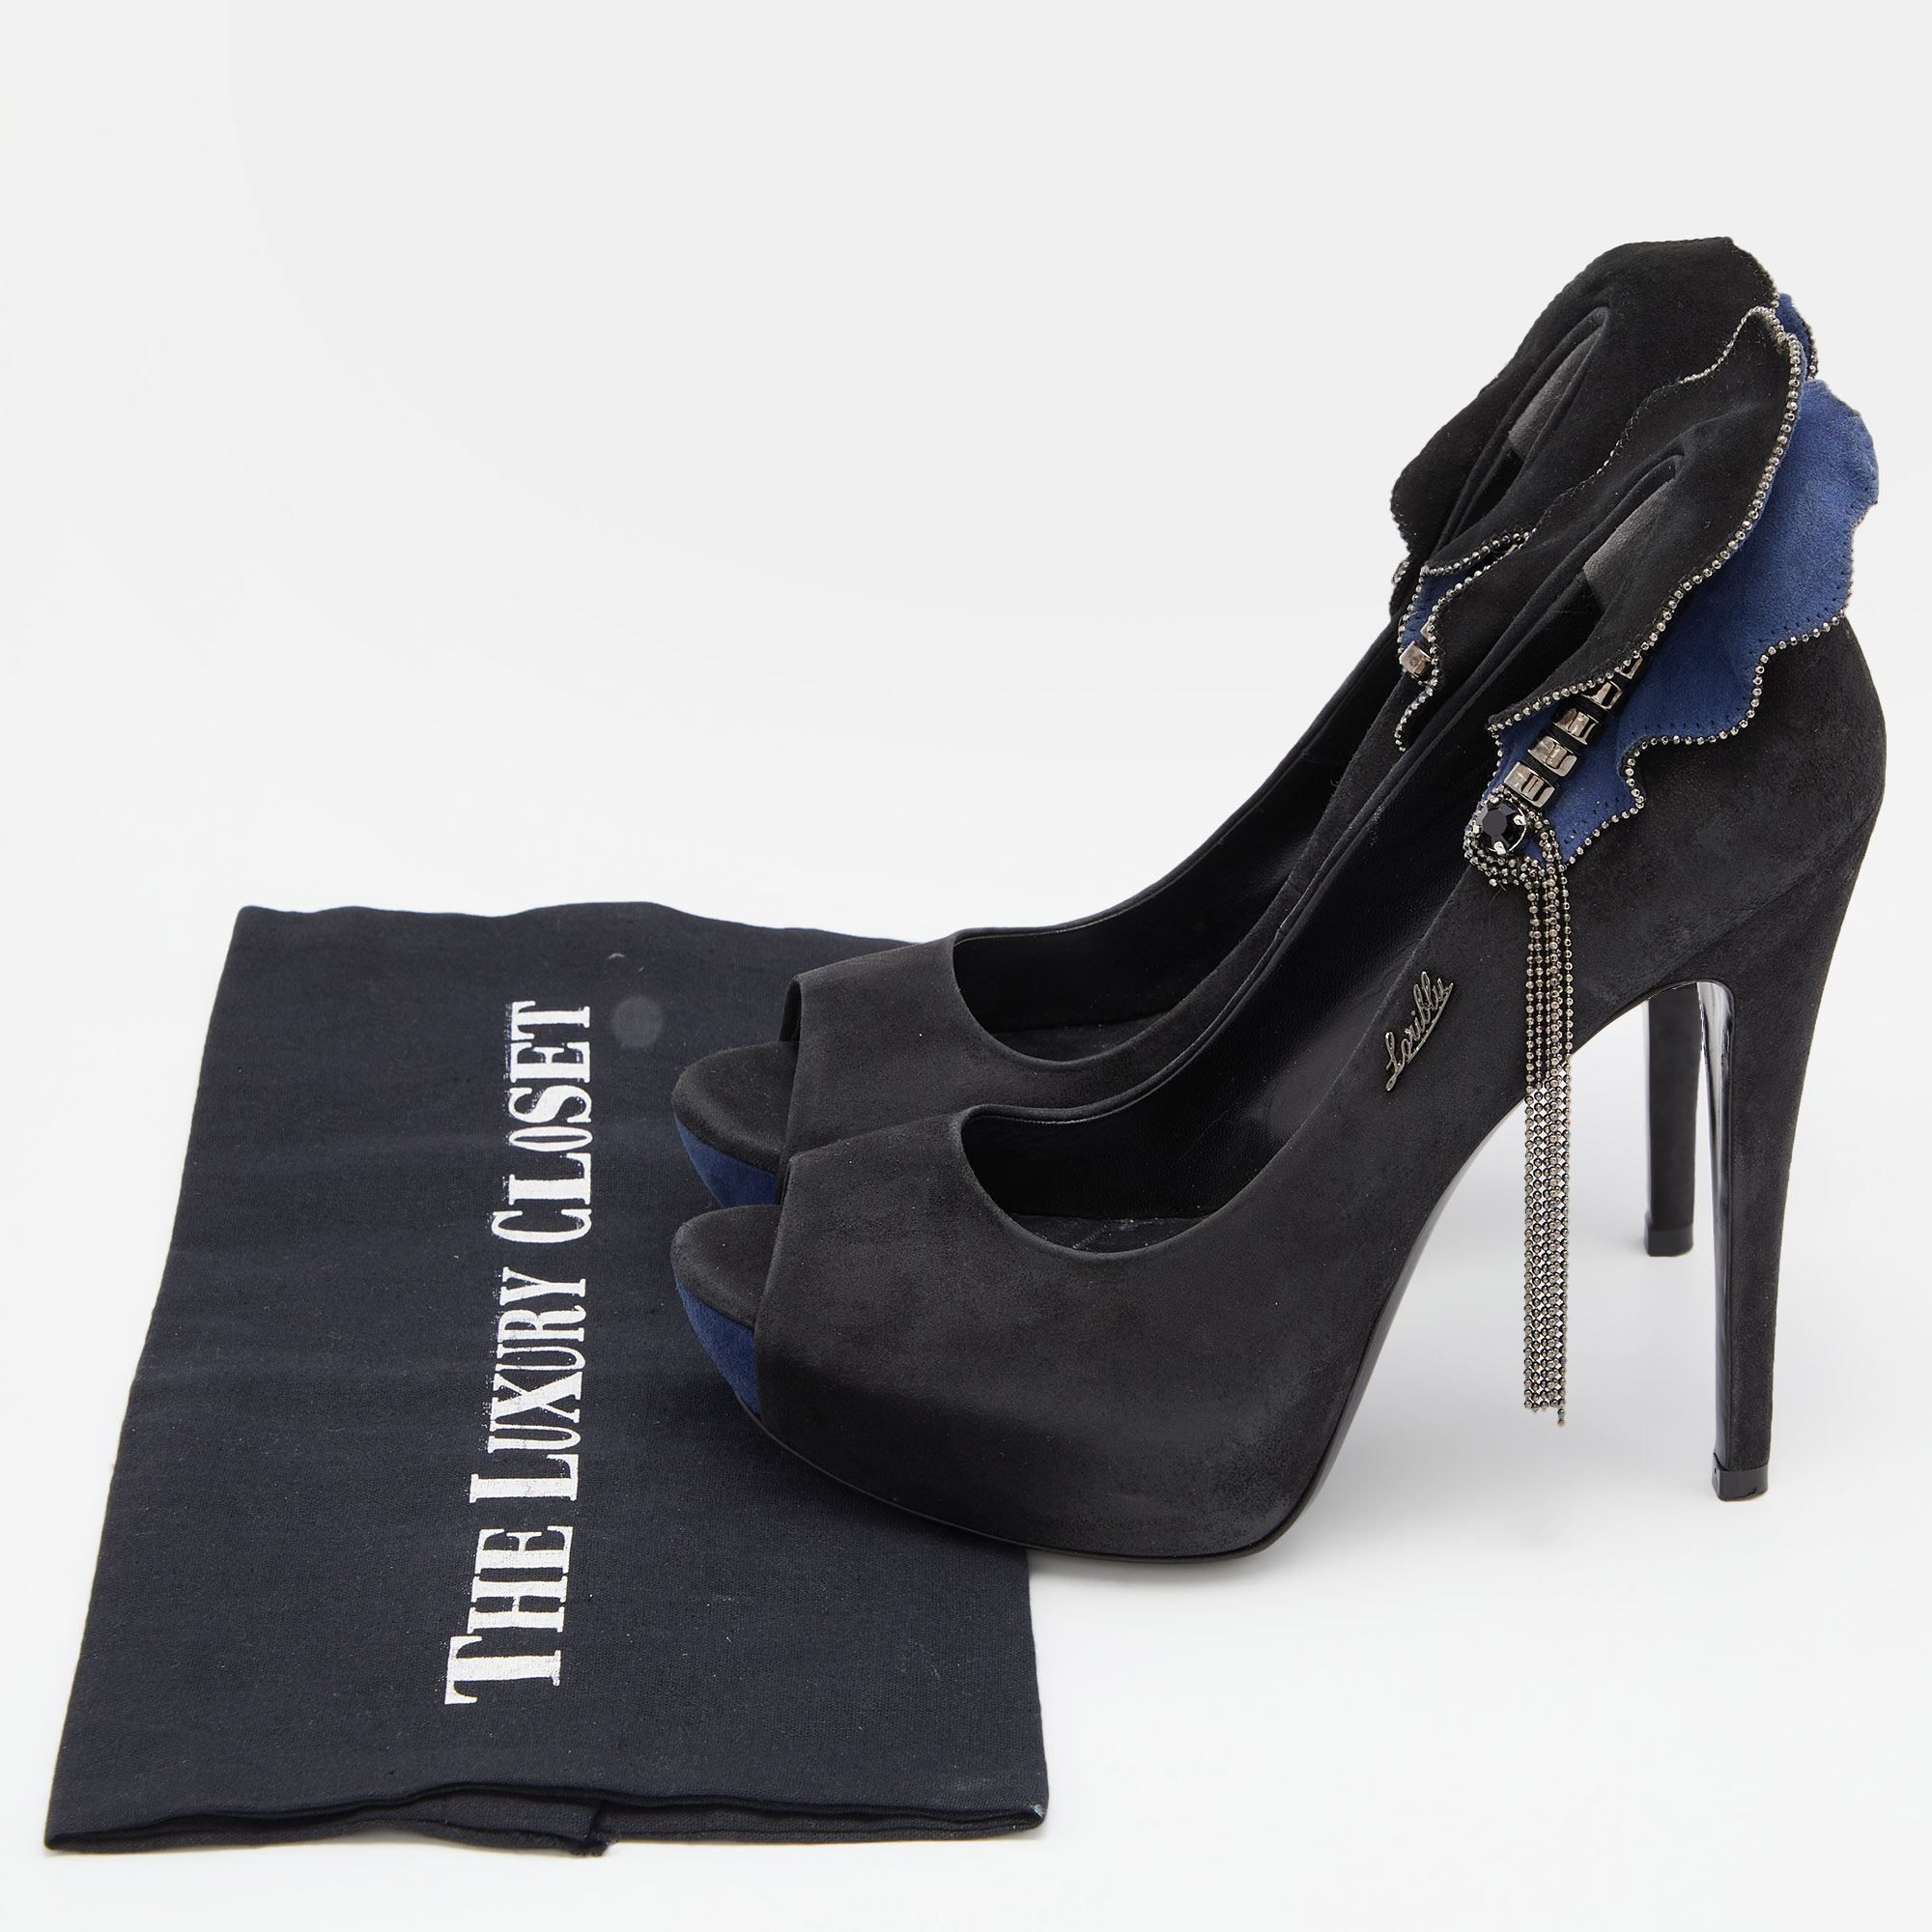 Loriblu Black/Blue Suede Embellished Peep Toe Pumps Size 37